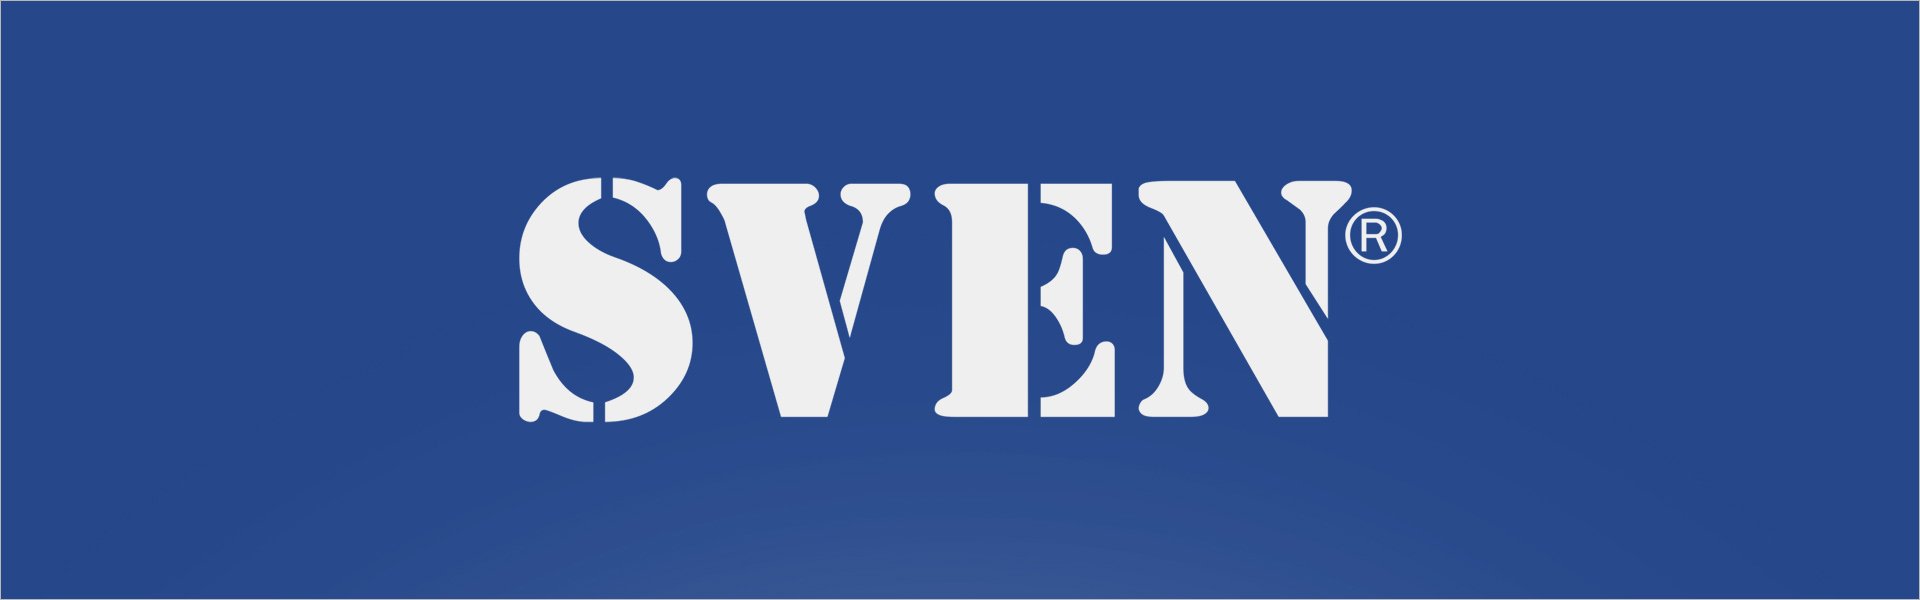 Sven PS-800 Sven